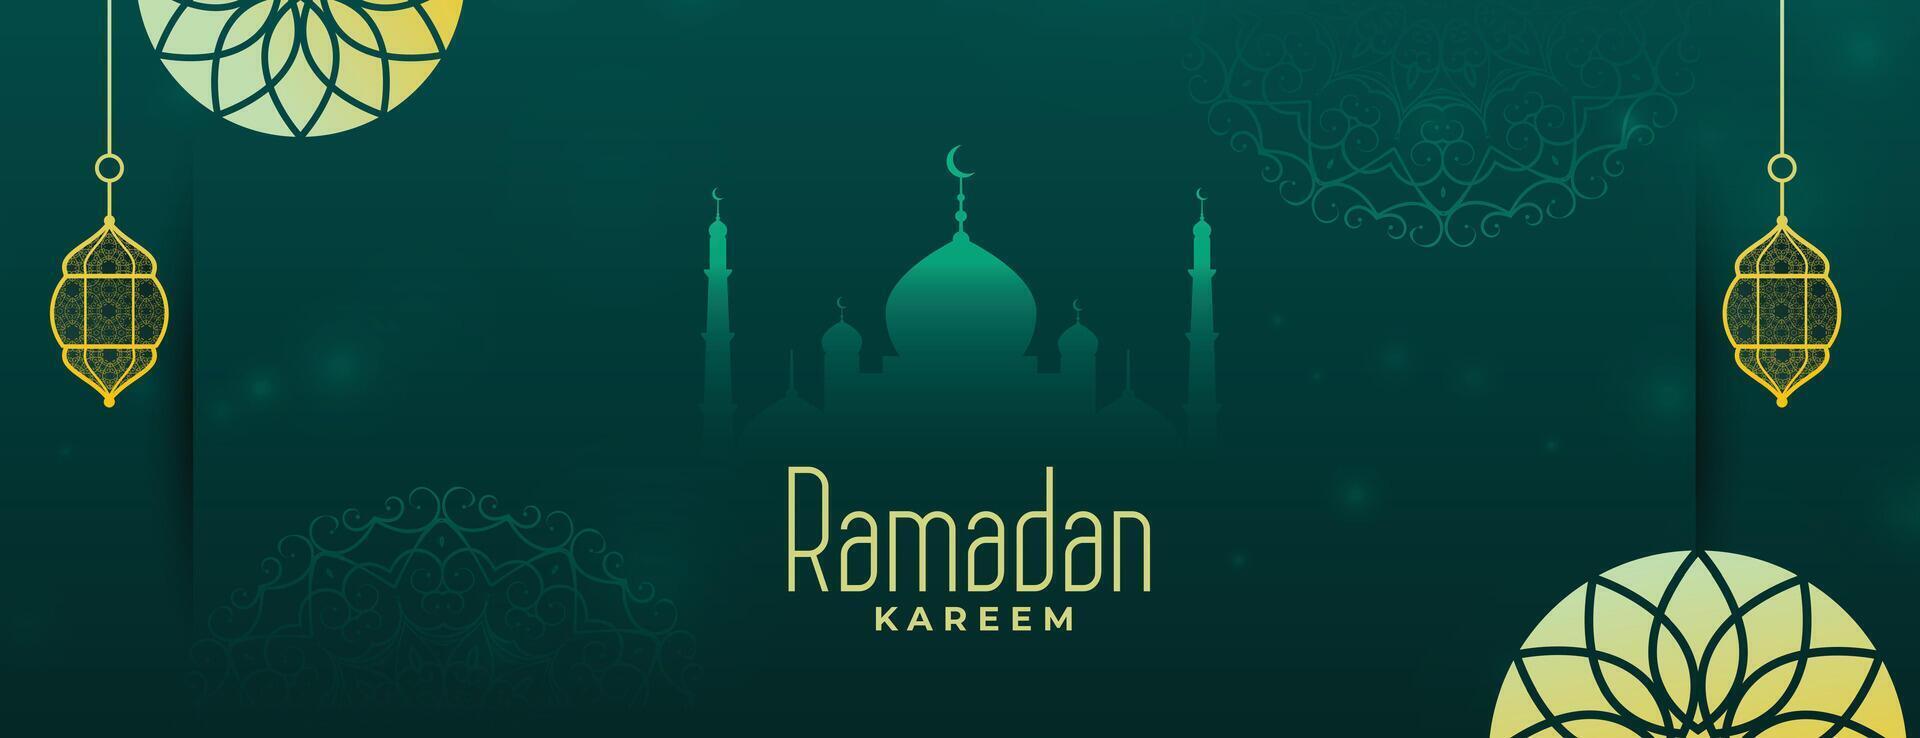 grön ramadan kareem eid festival arabicum baner design vektor